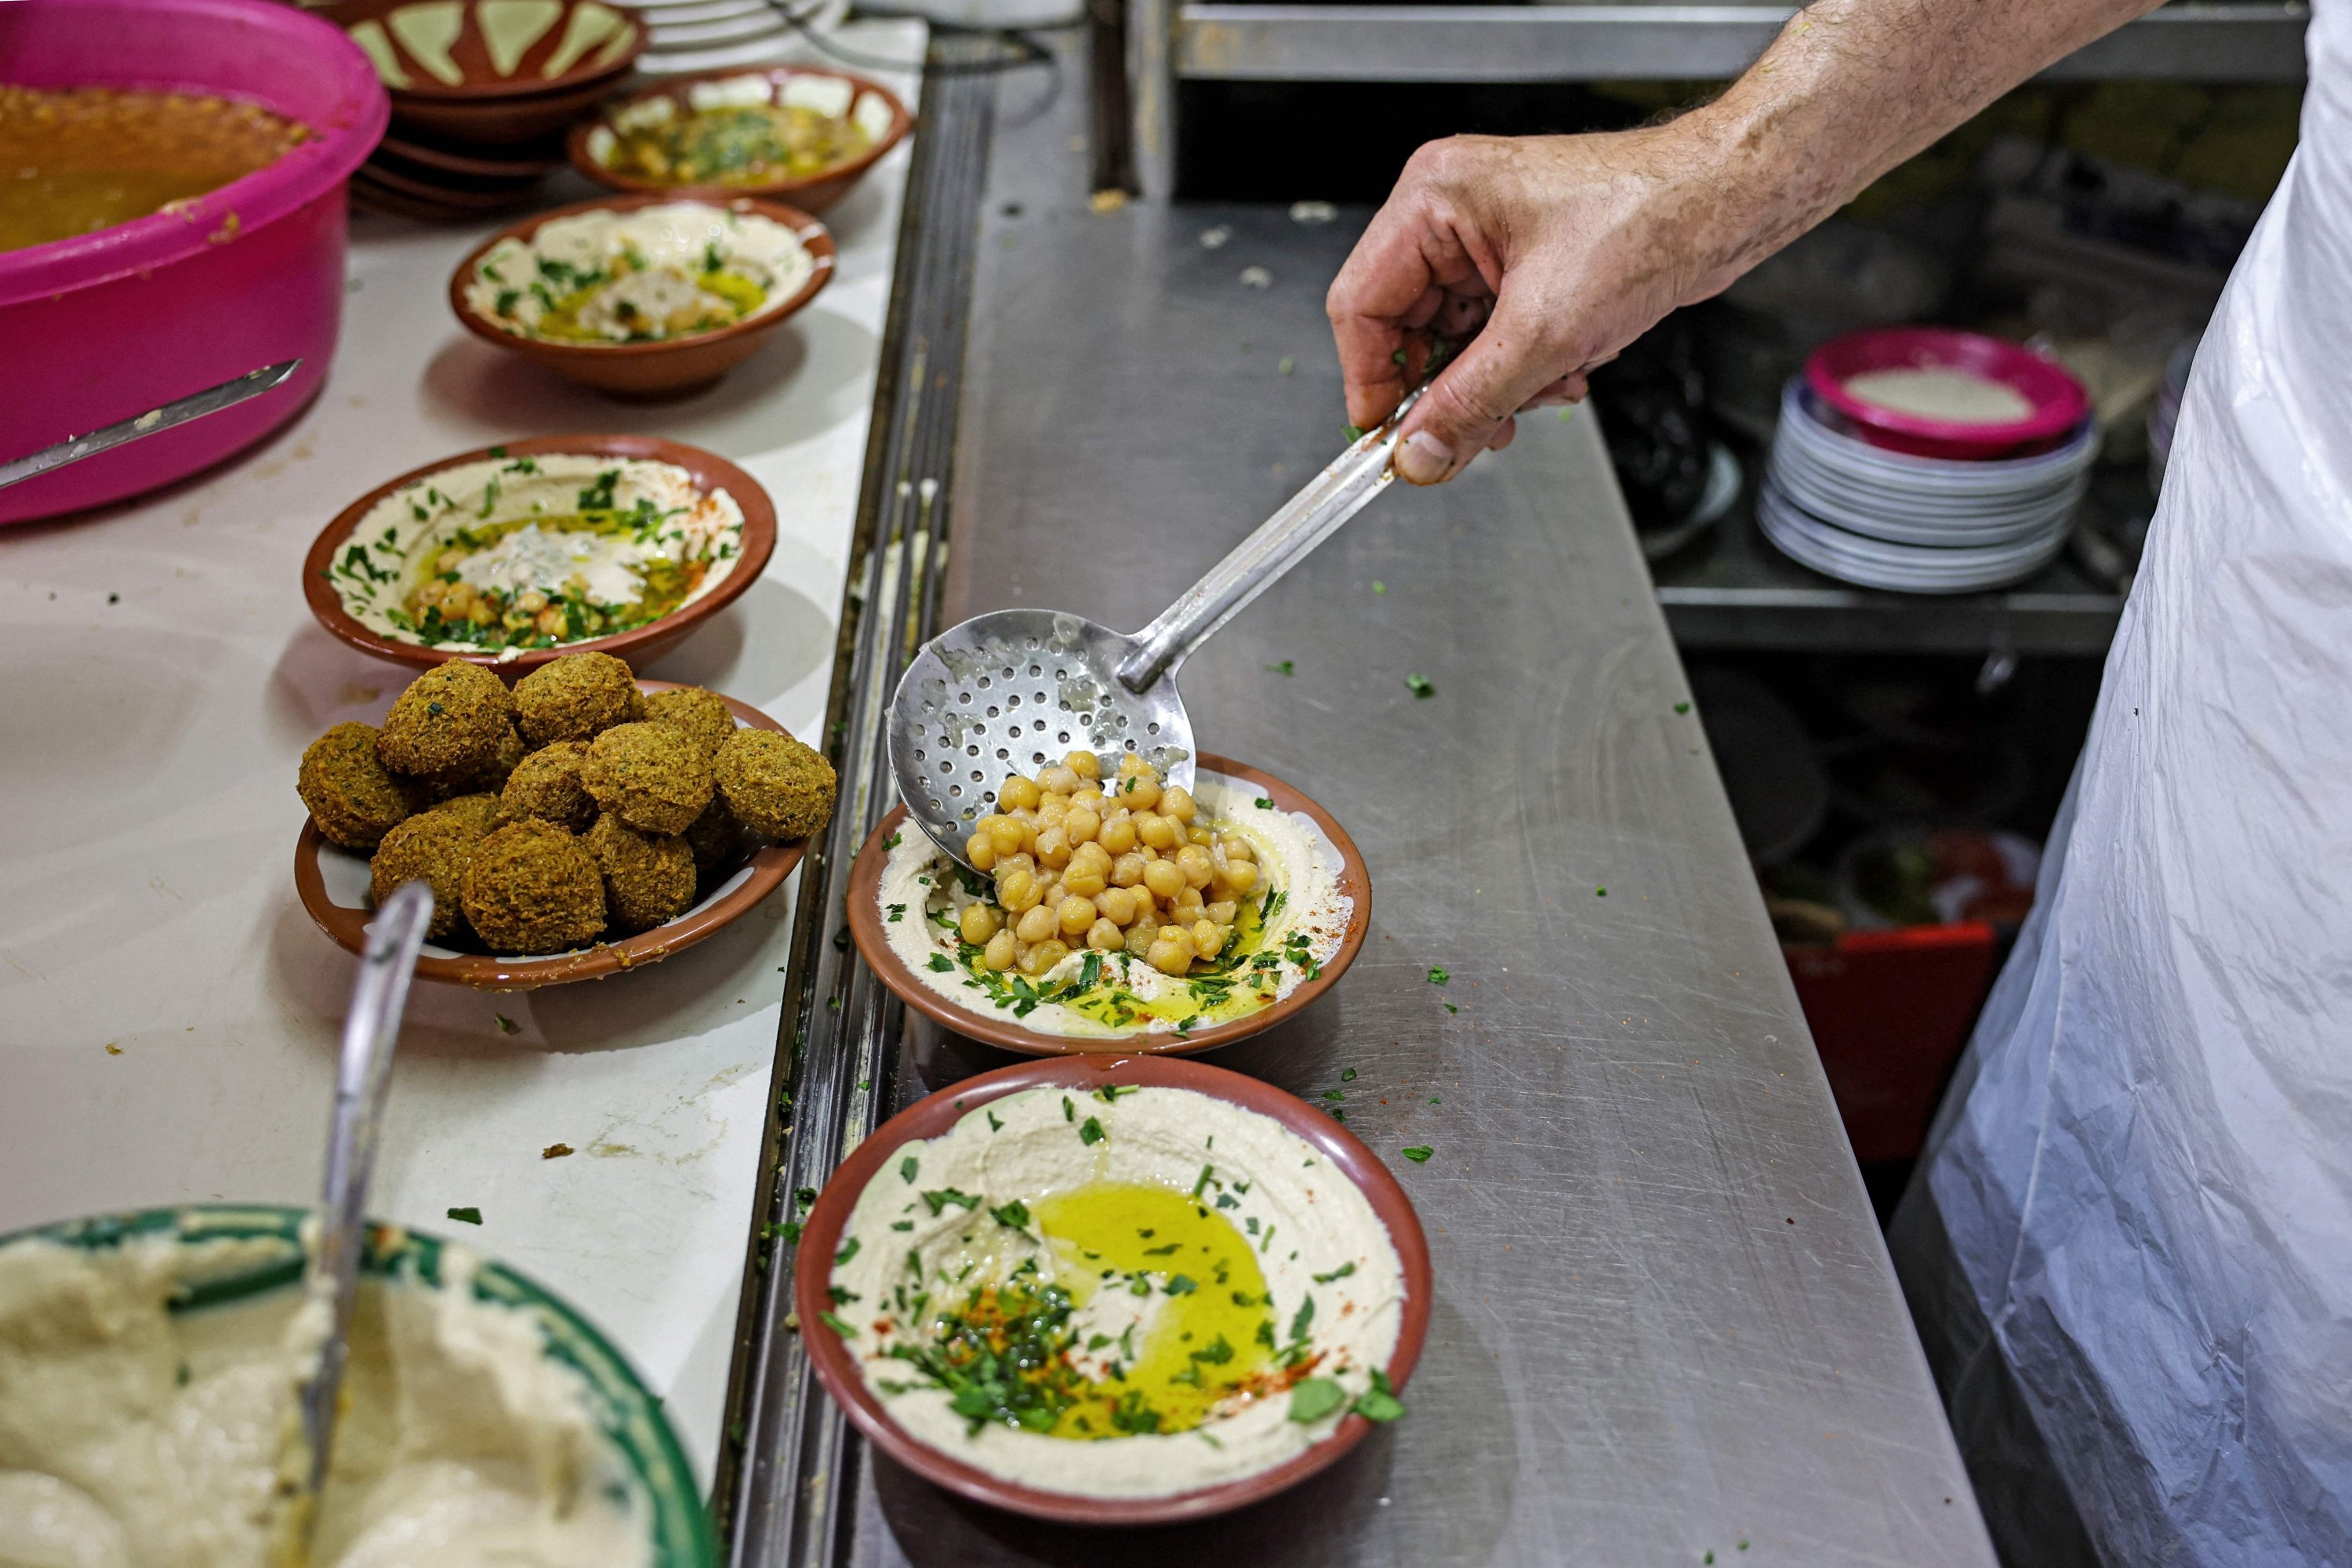 Seorang juru masak menyiapkan sepiring hummus untuk disajikan kepada klien di sebuah restoran di Kota Tua Yerusalem, Palestina yang diduduki, 26 Juli 2022. (AFP Photo)